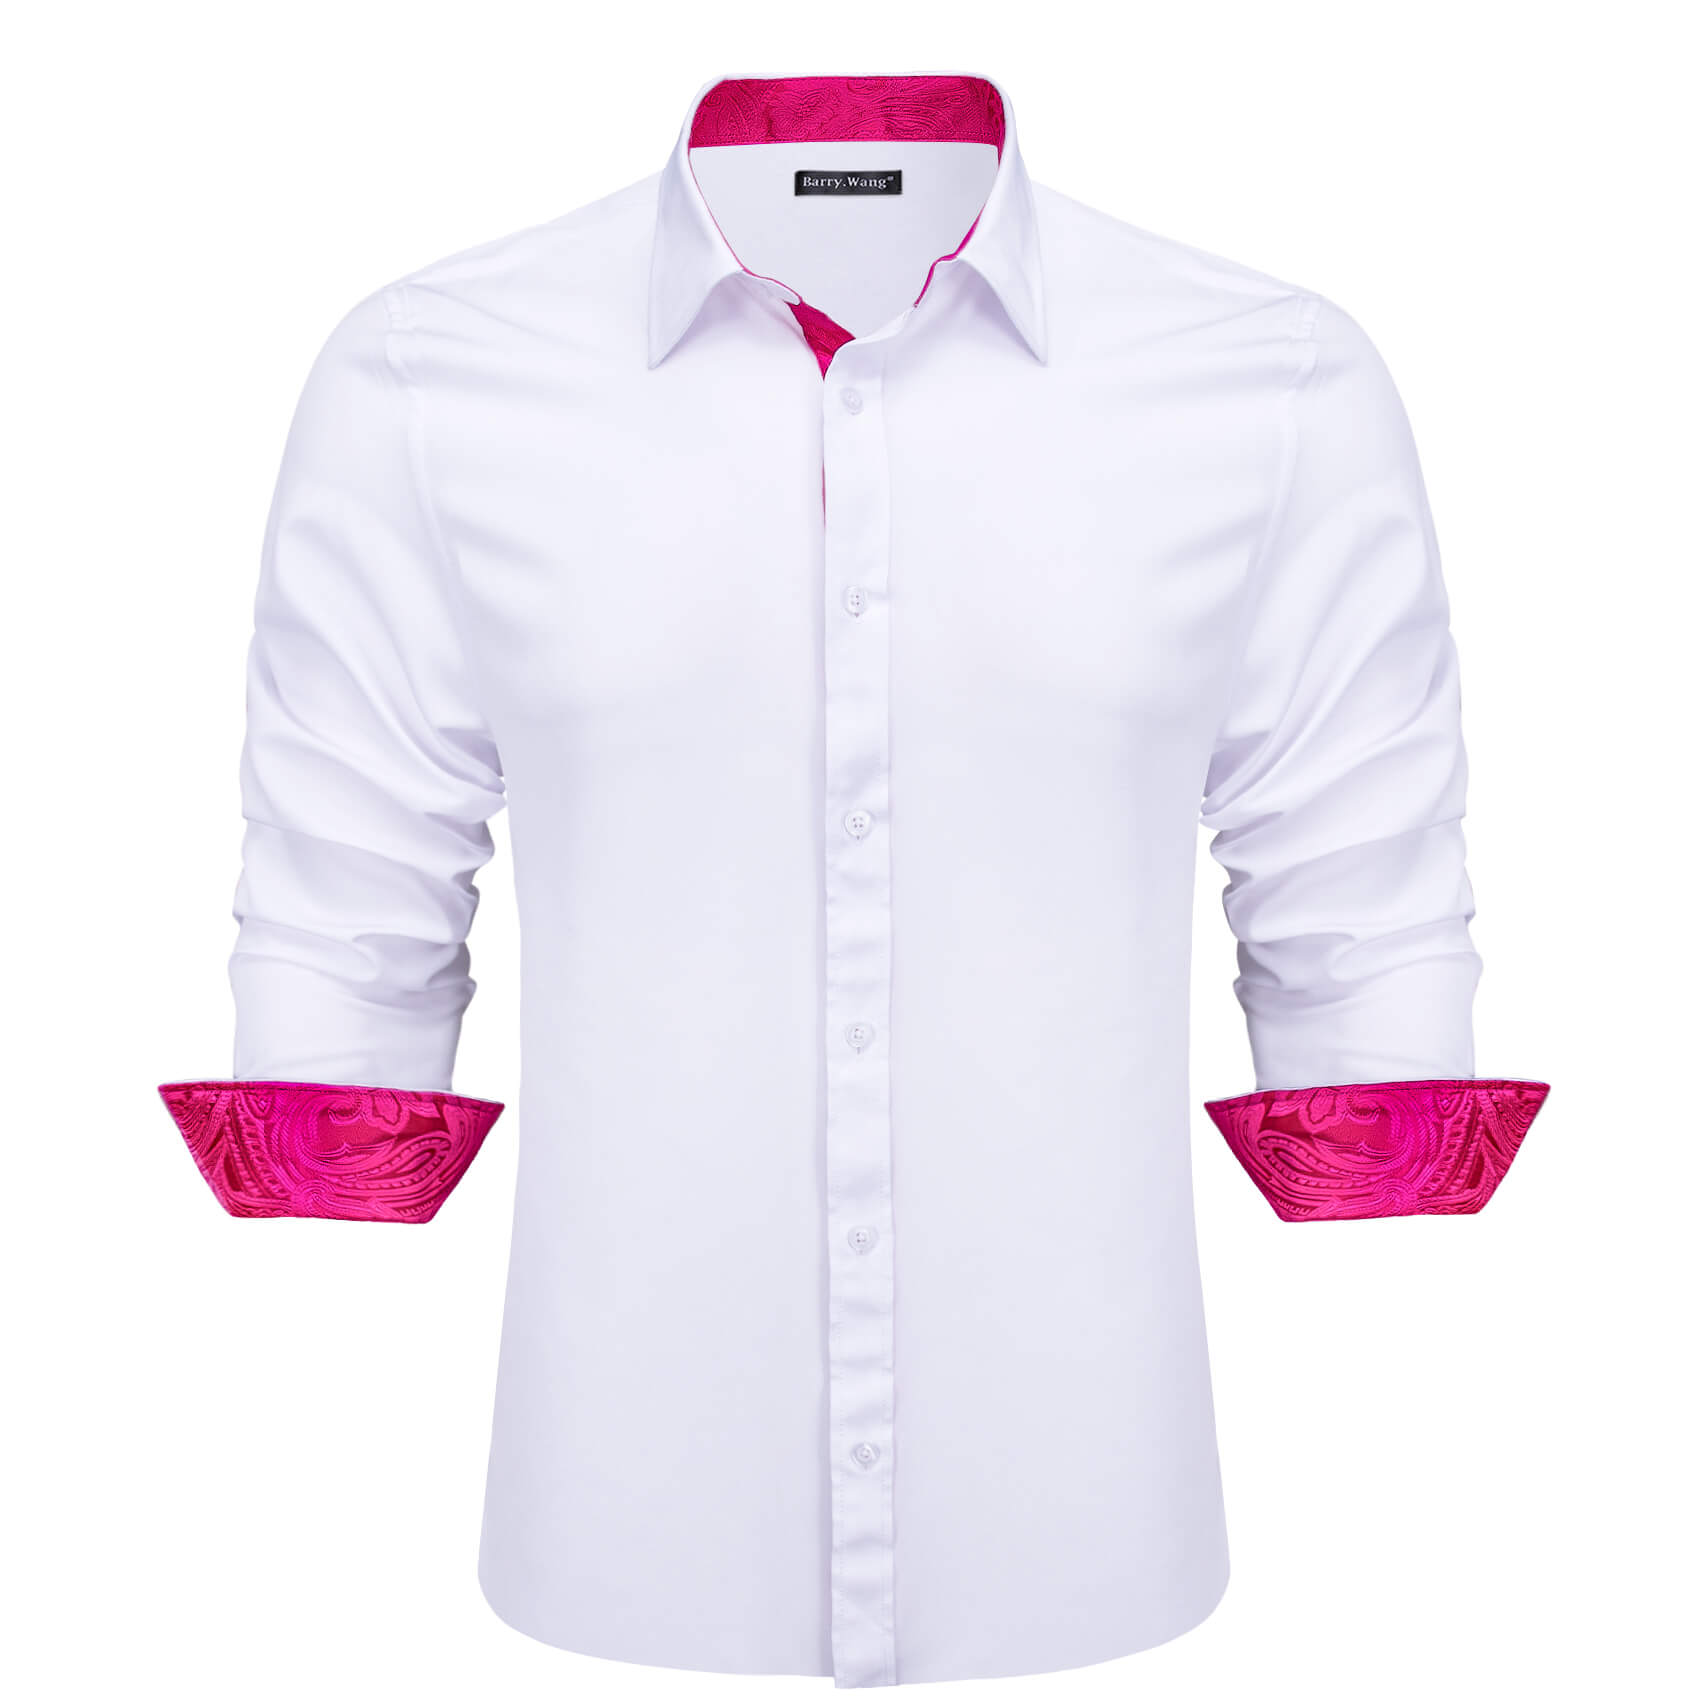 Splicing Shirt White Rose Pink Paisley Men's Long Sleeve Shirt